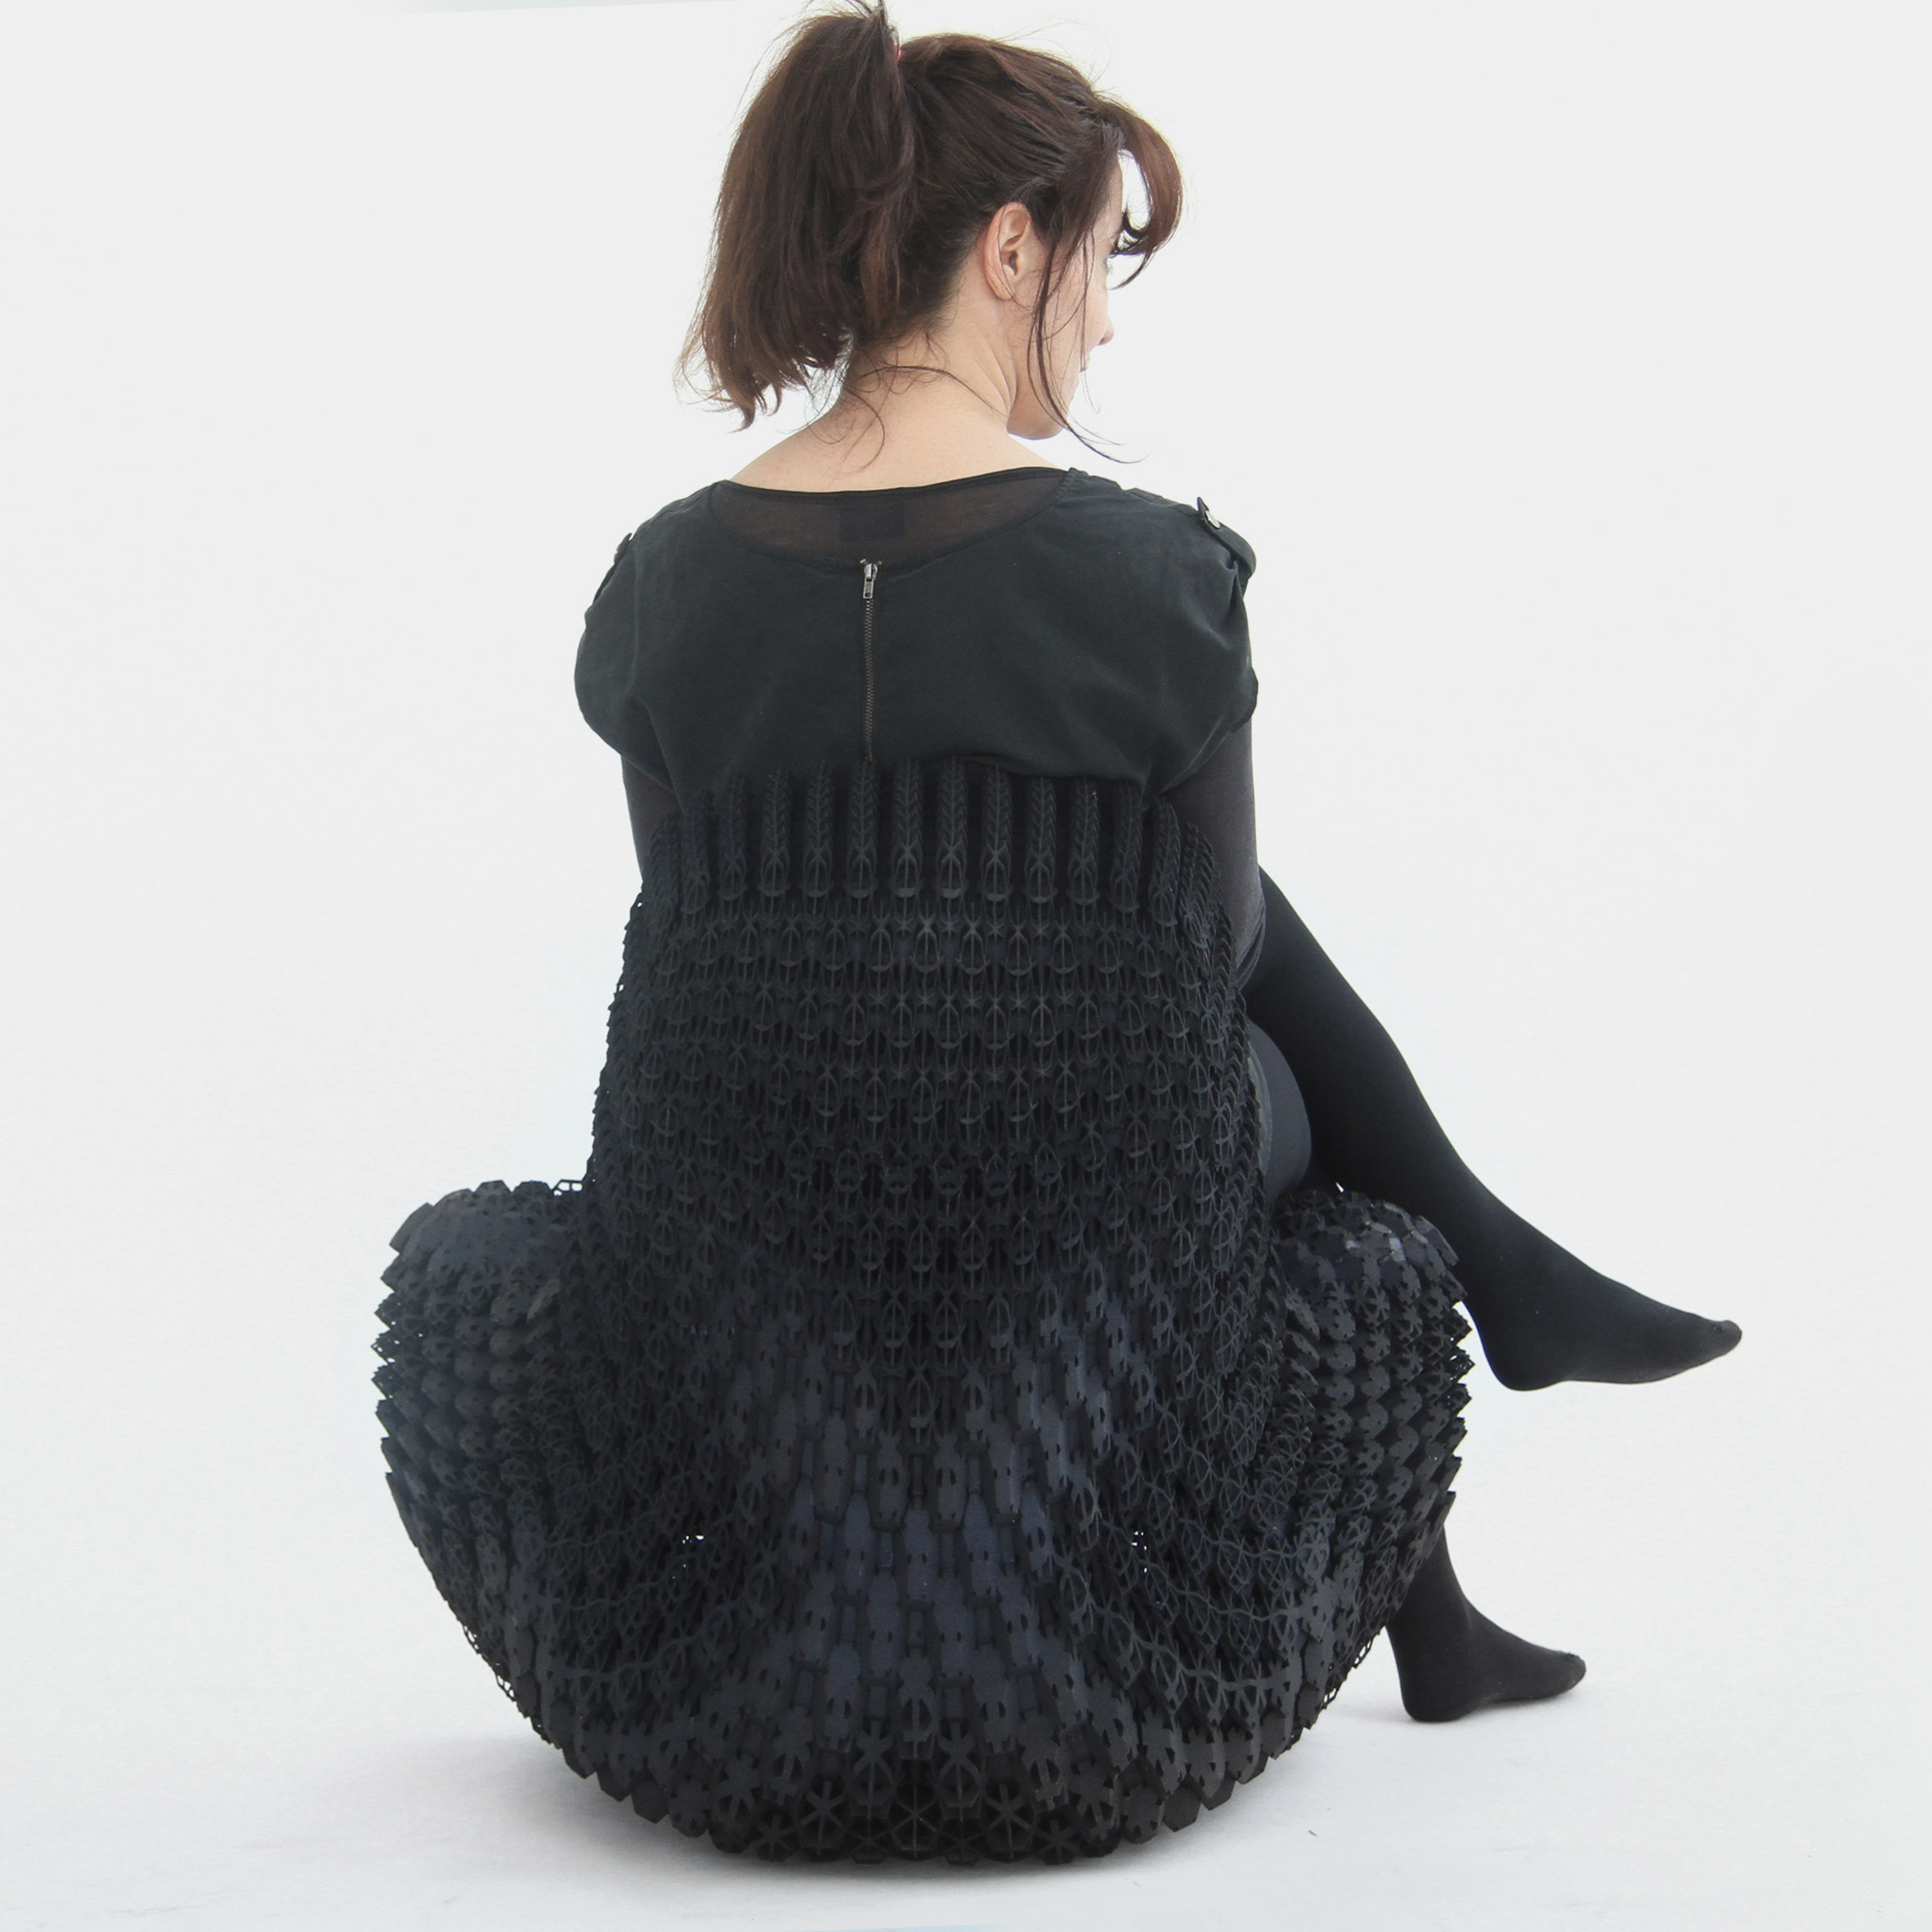 Soft Gradient Chair by Joris Laarman